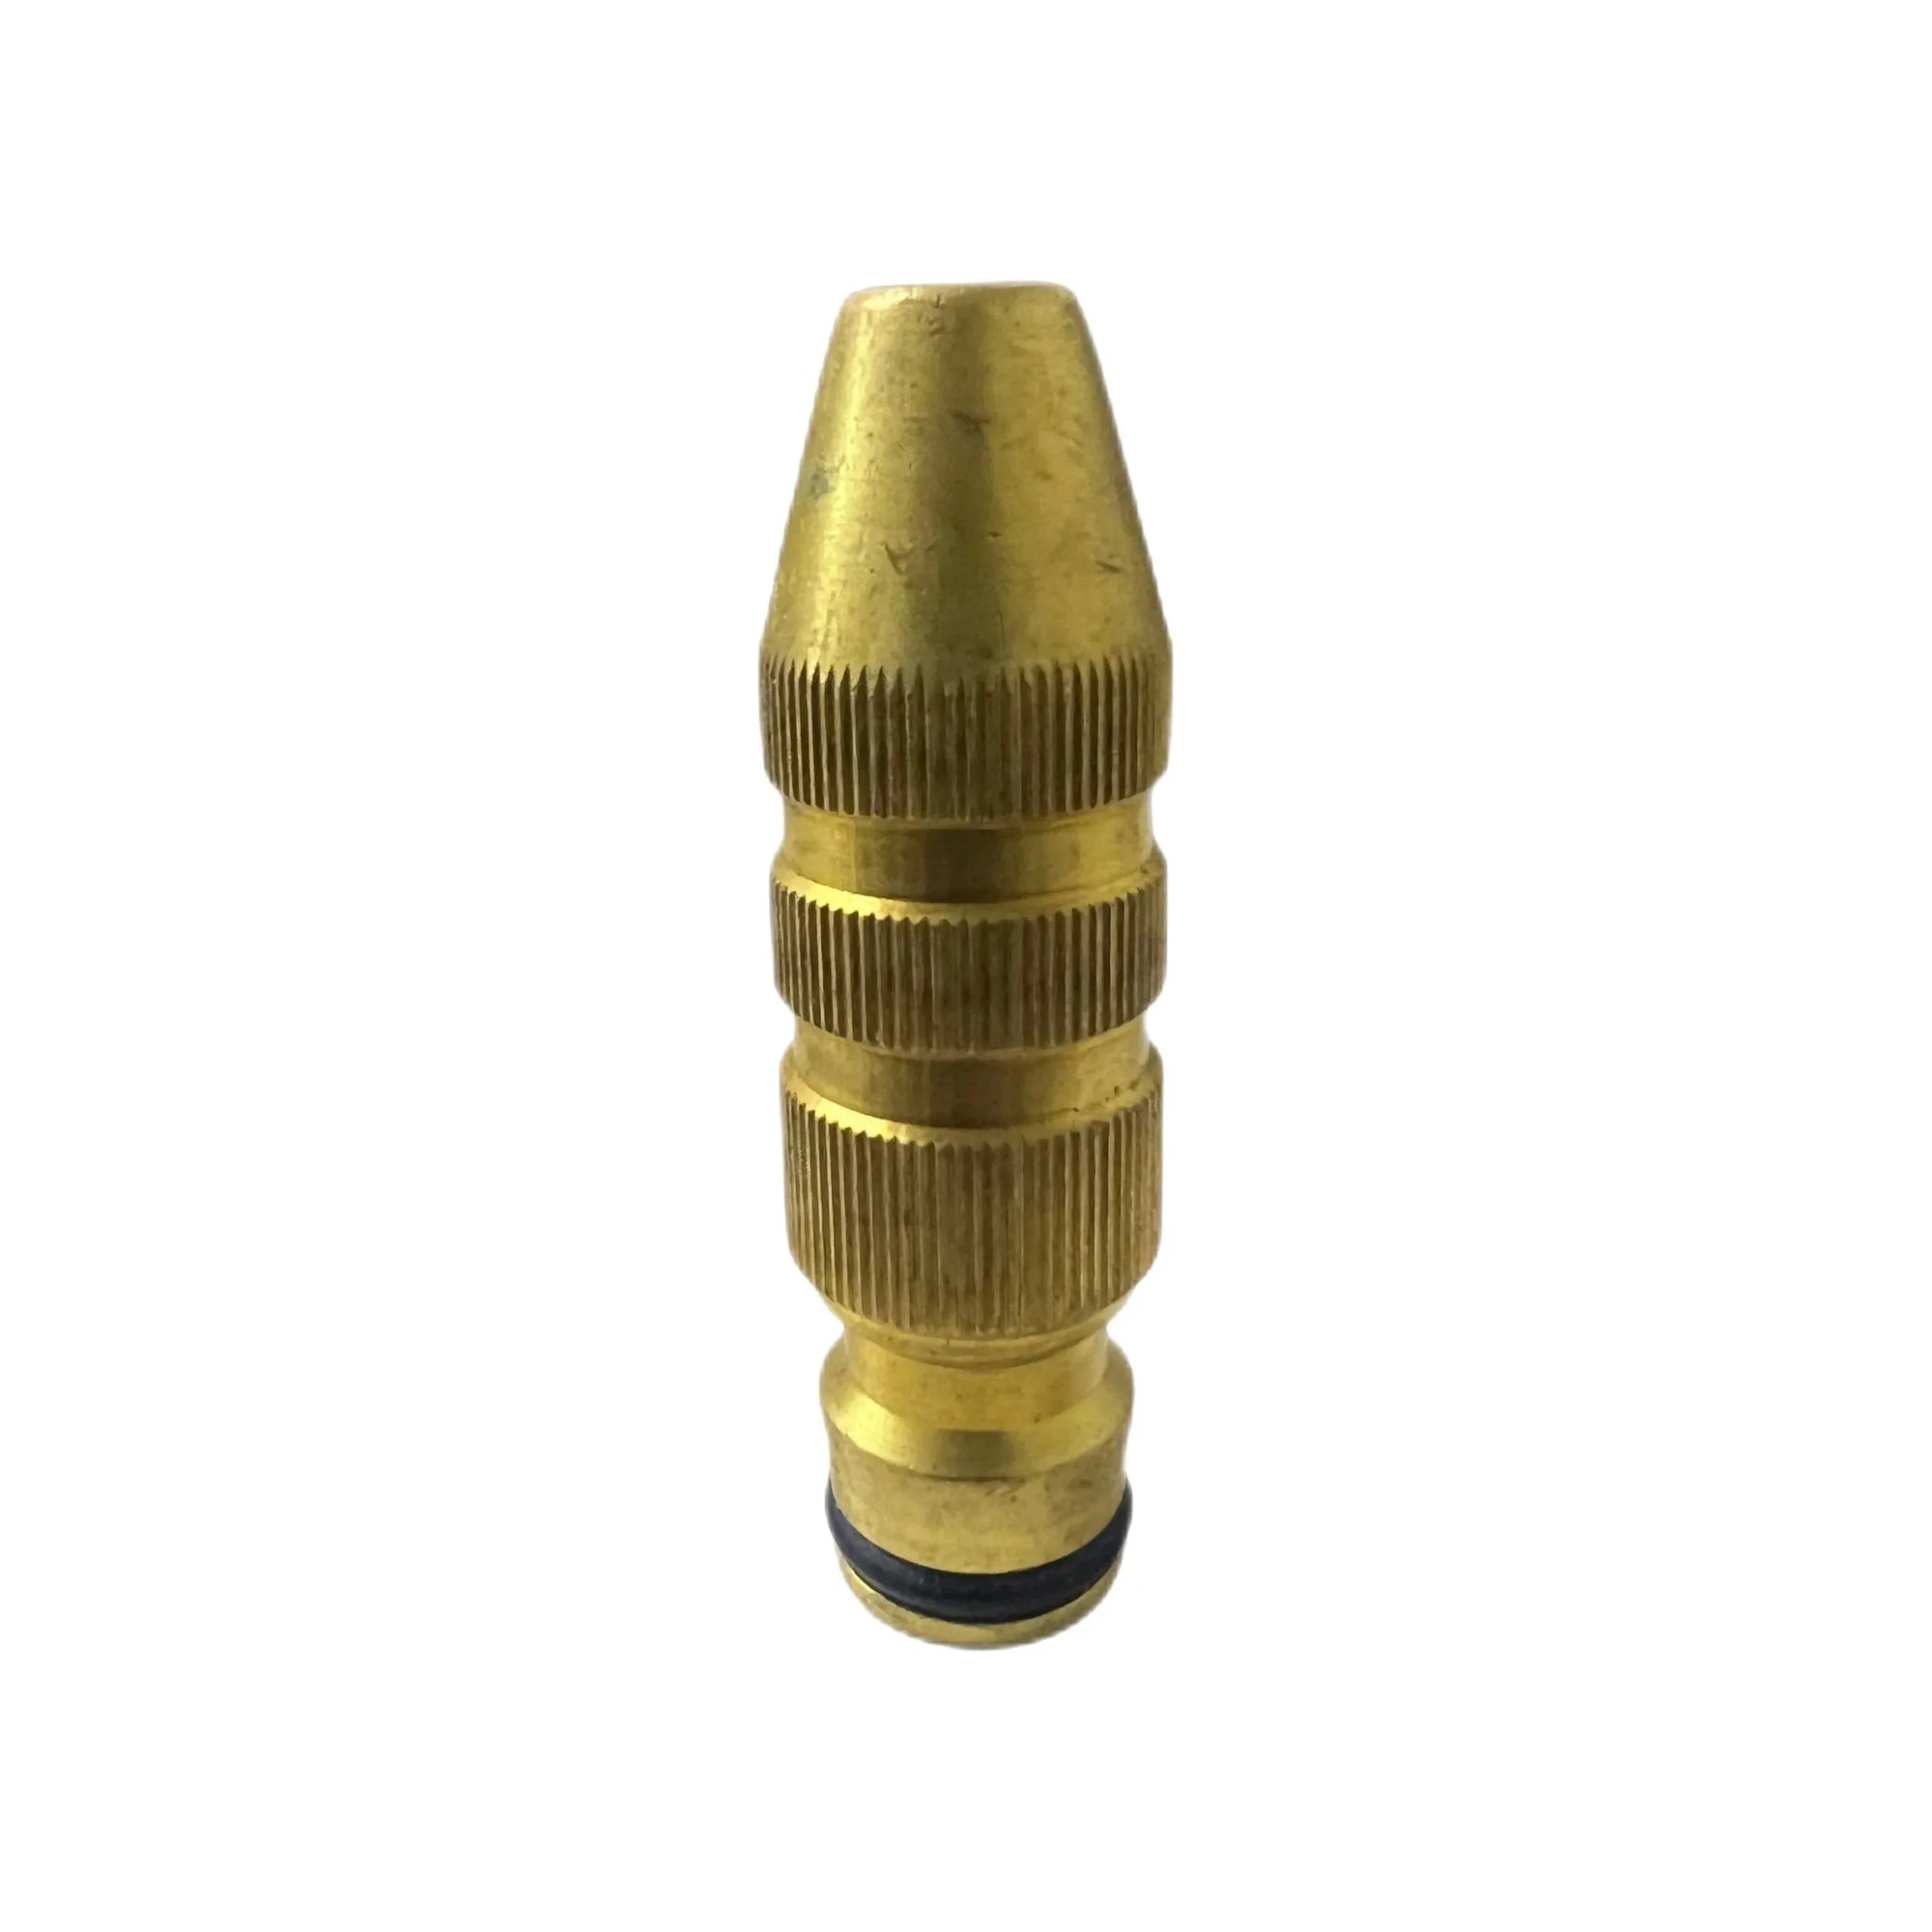 NETA Brass Brass Jet Hose Nozzle 12mm / 1/2"